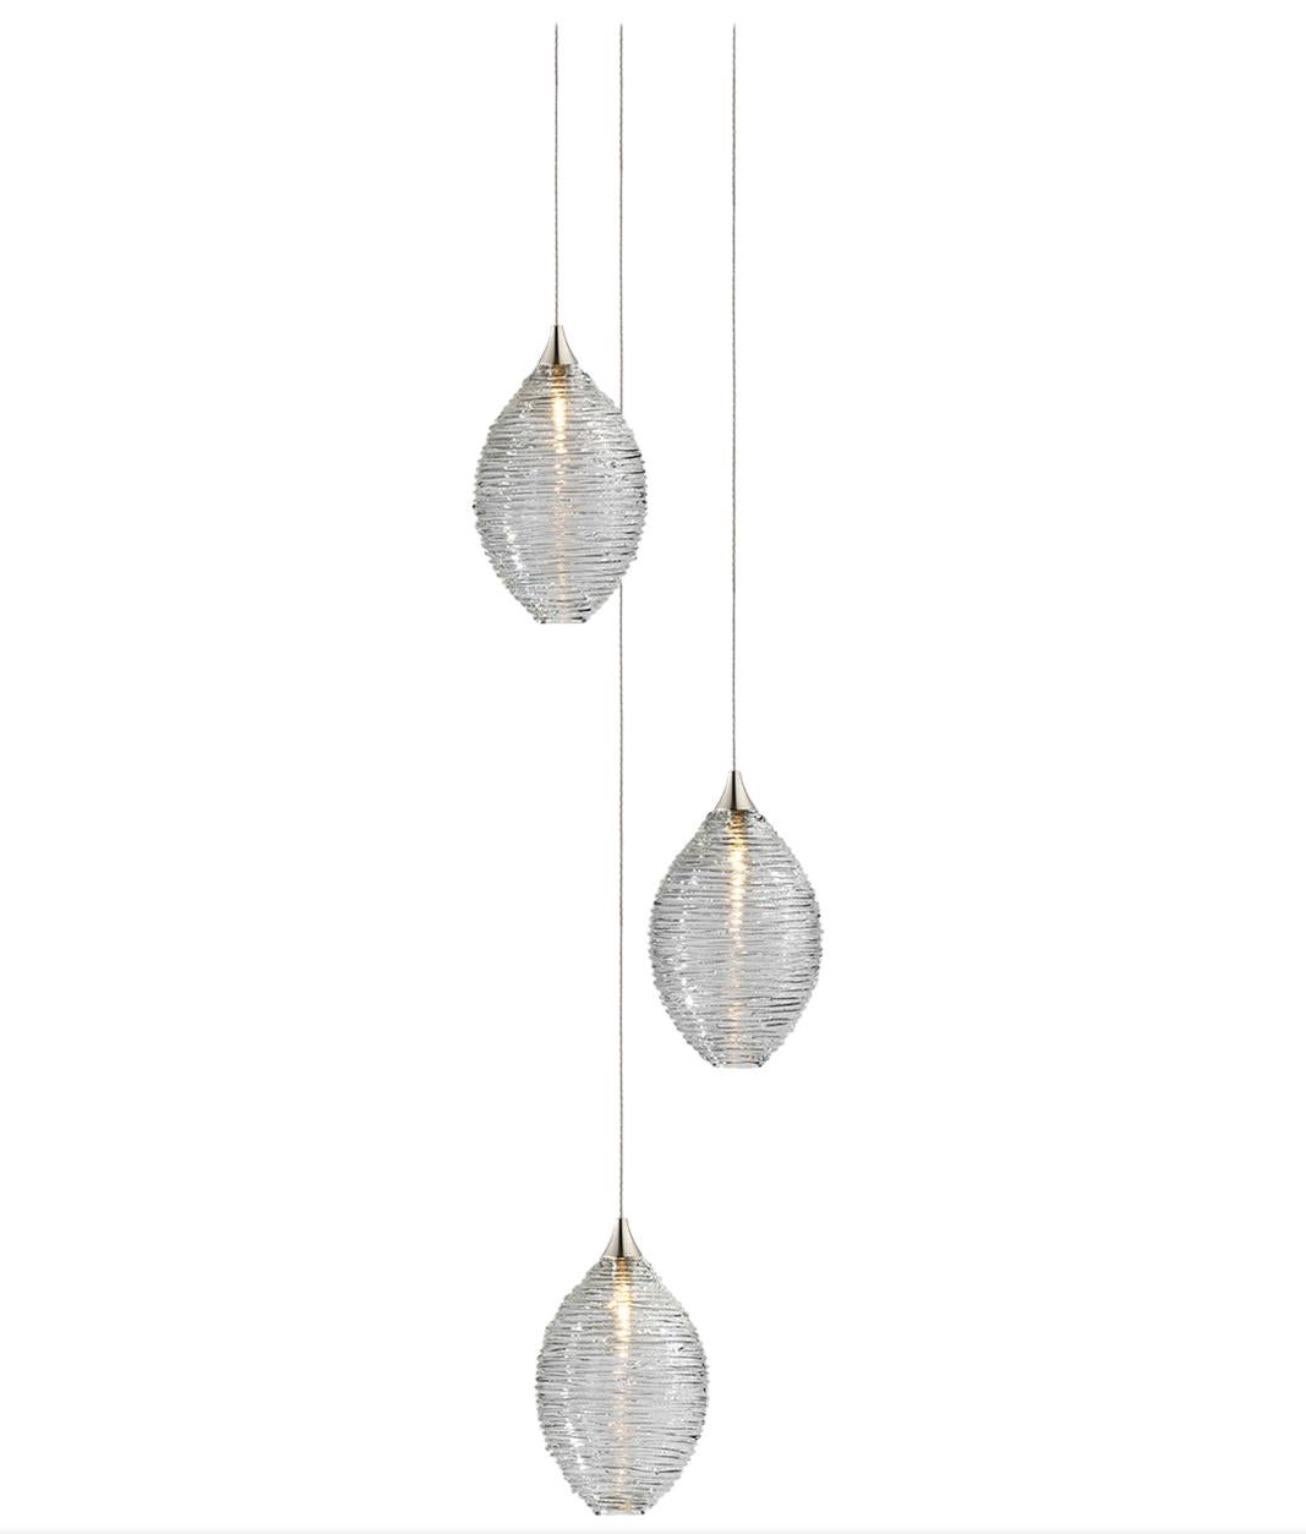 Hand-blown glass pendants fixtures. 3 glass pendants on 8